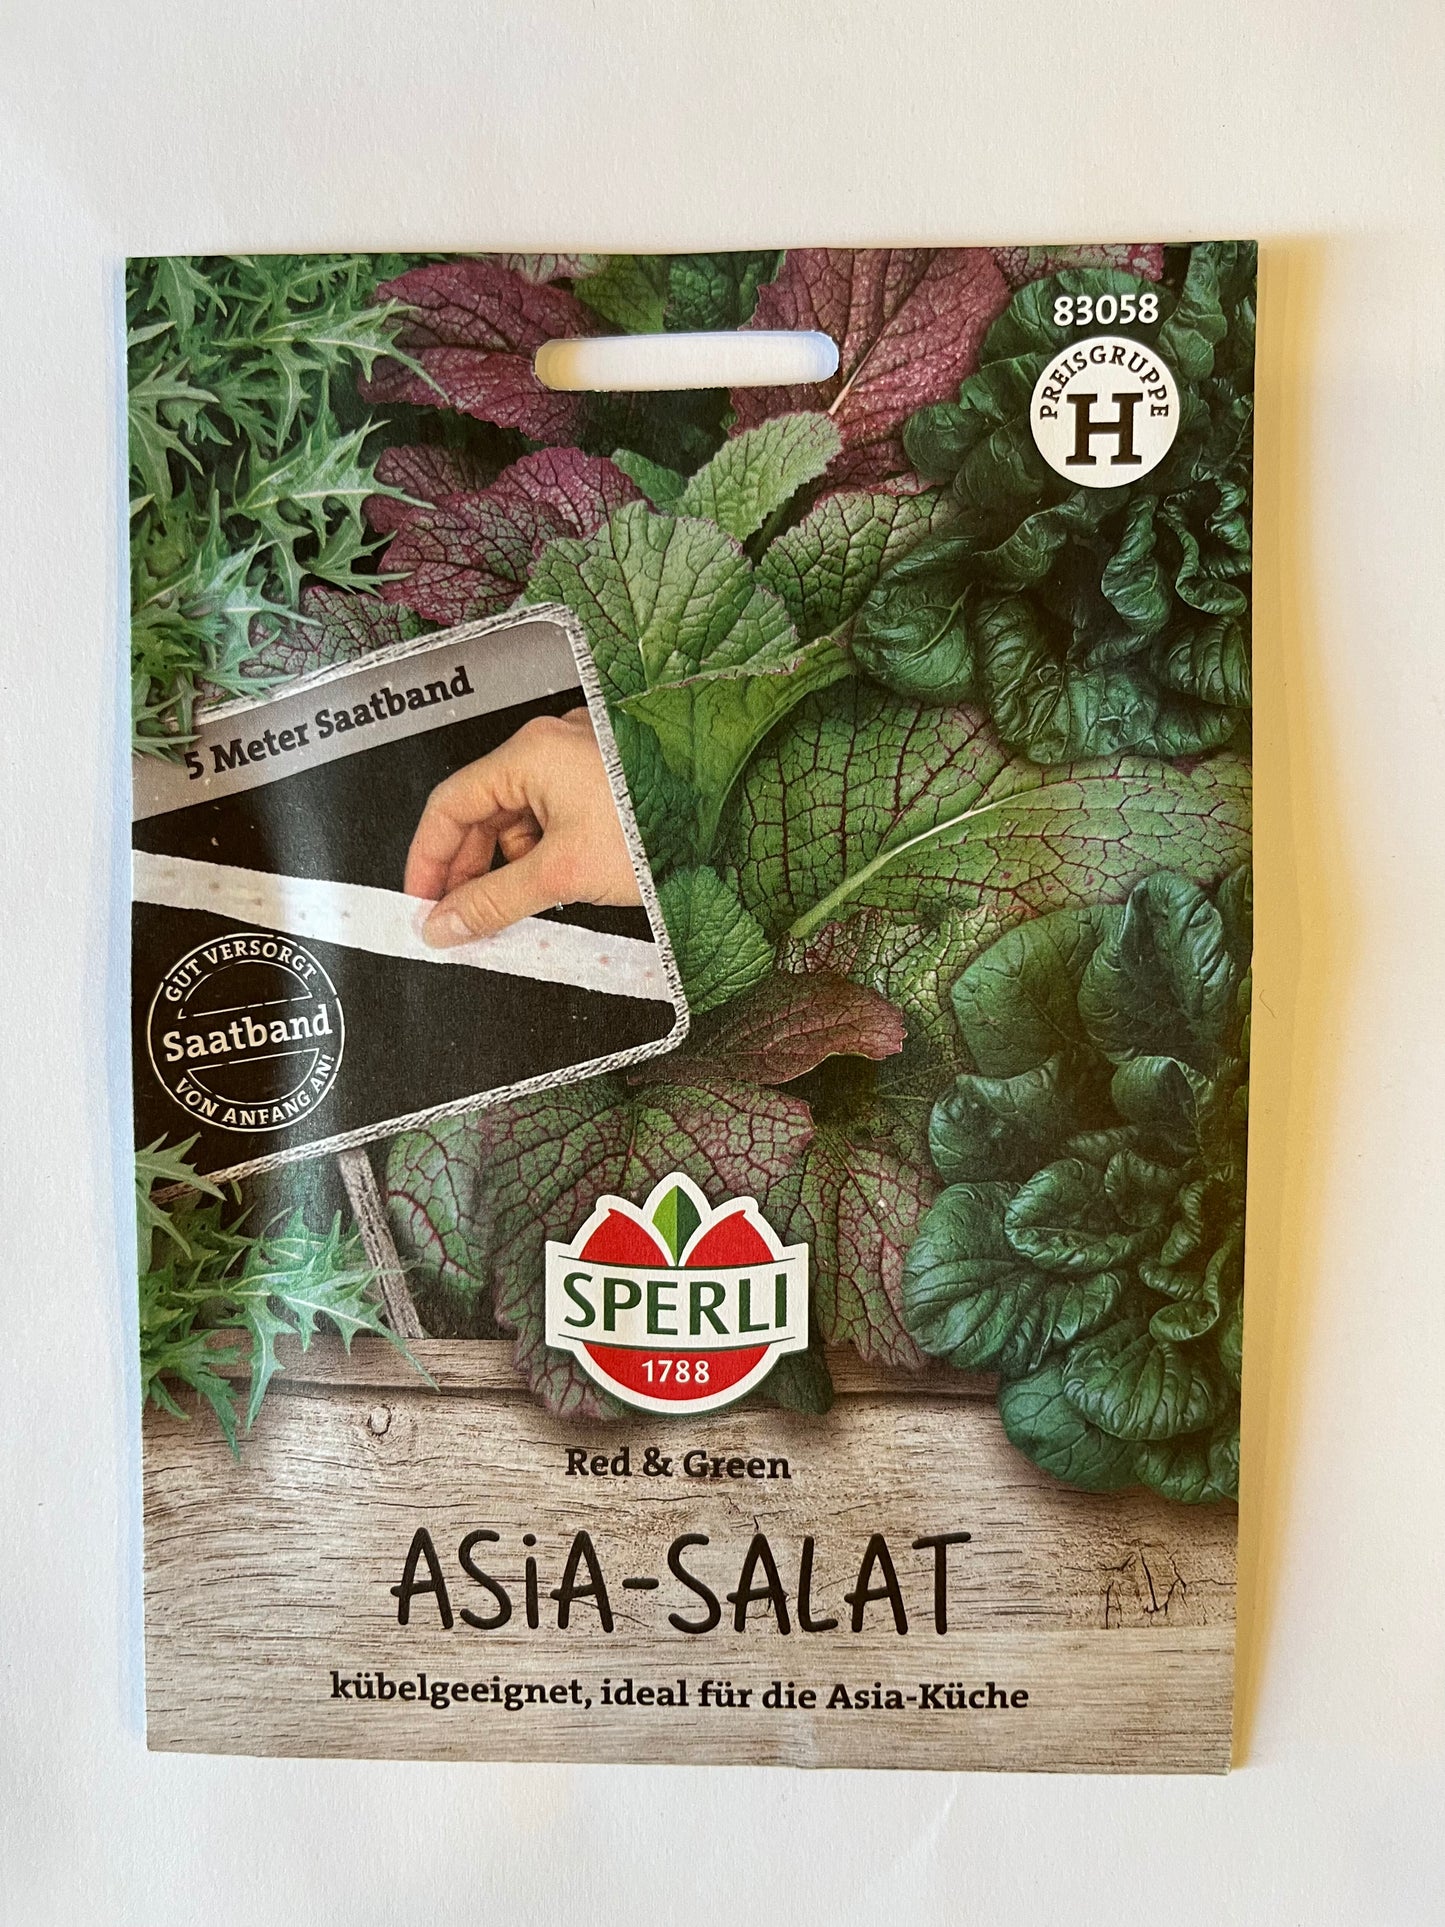 Asia-Salat im Saatband